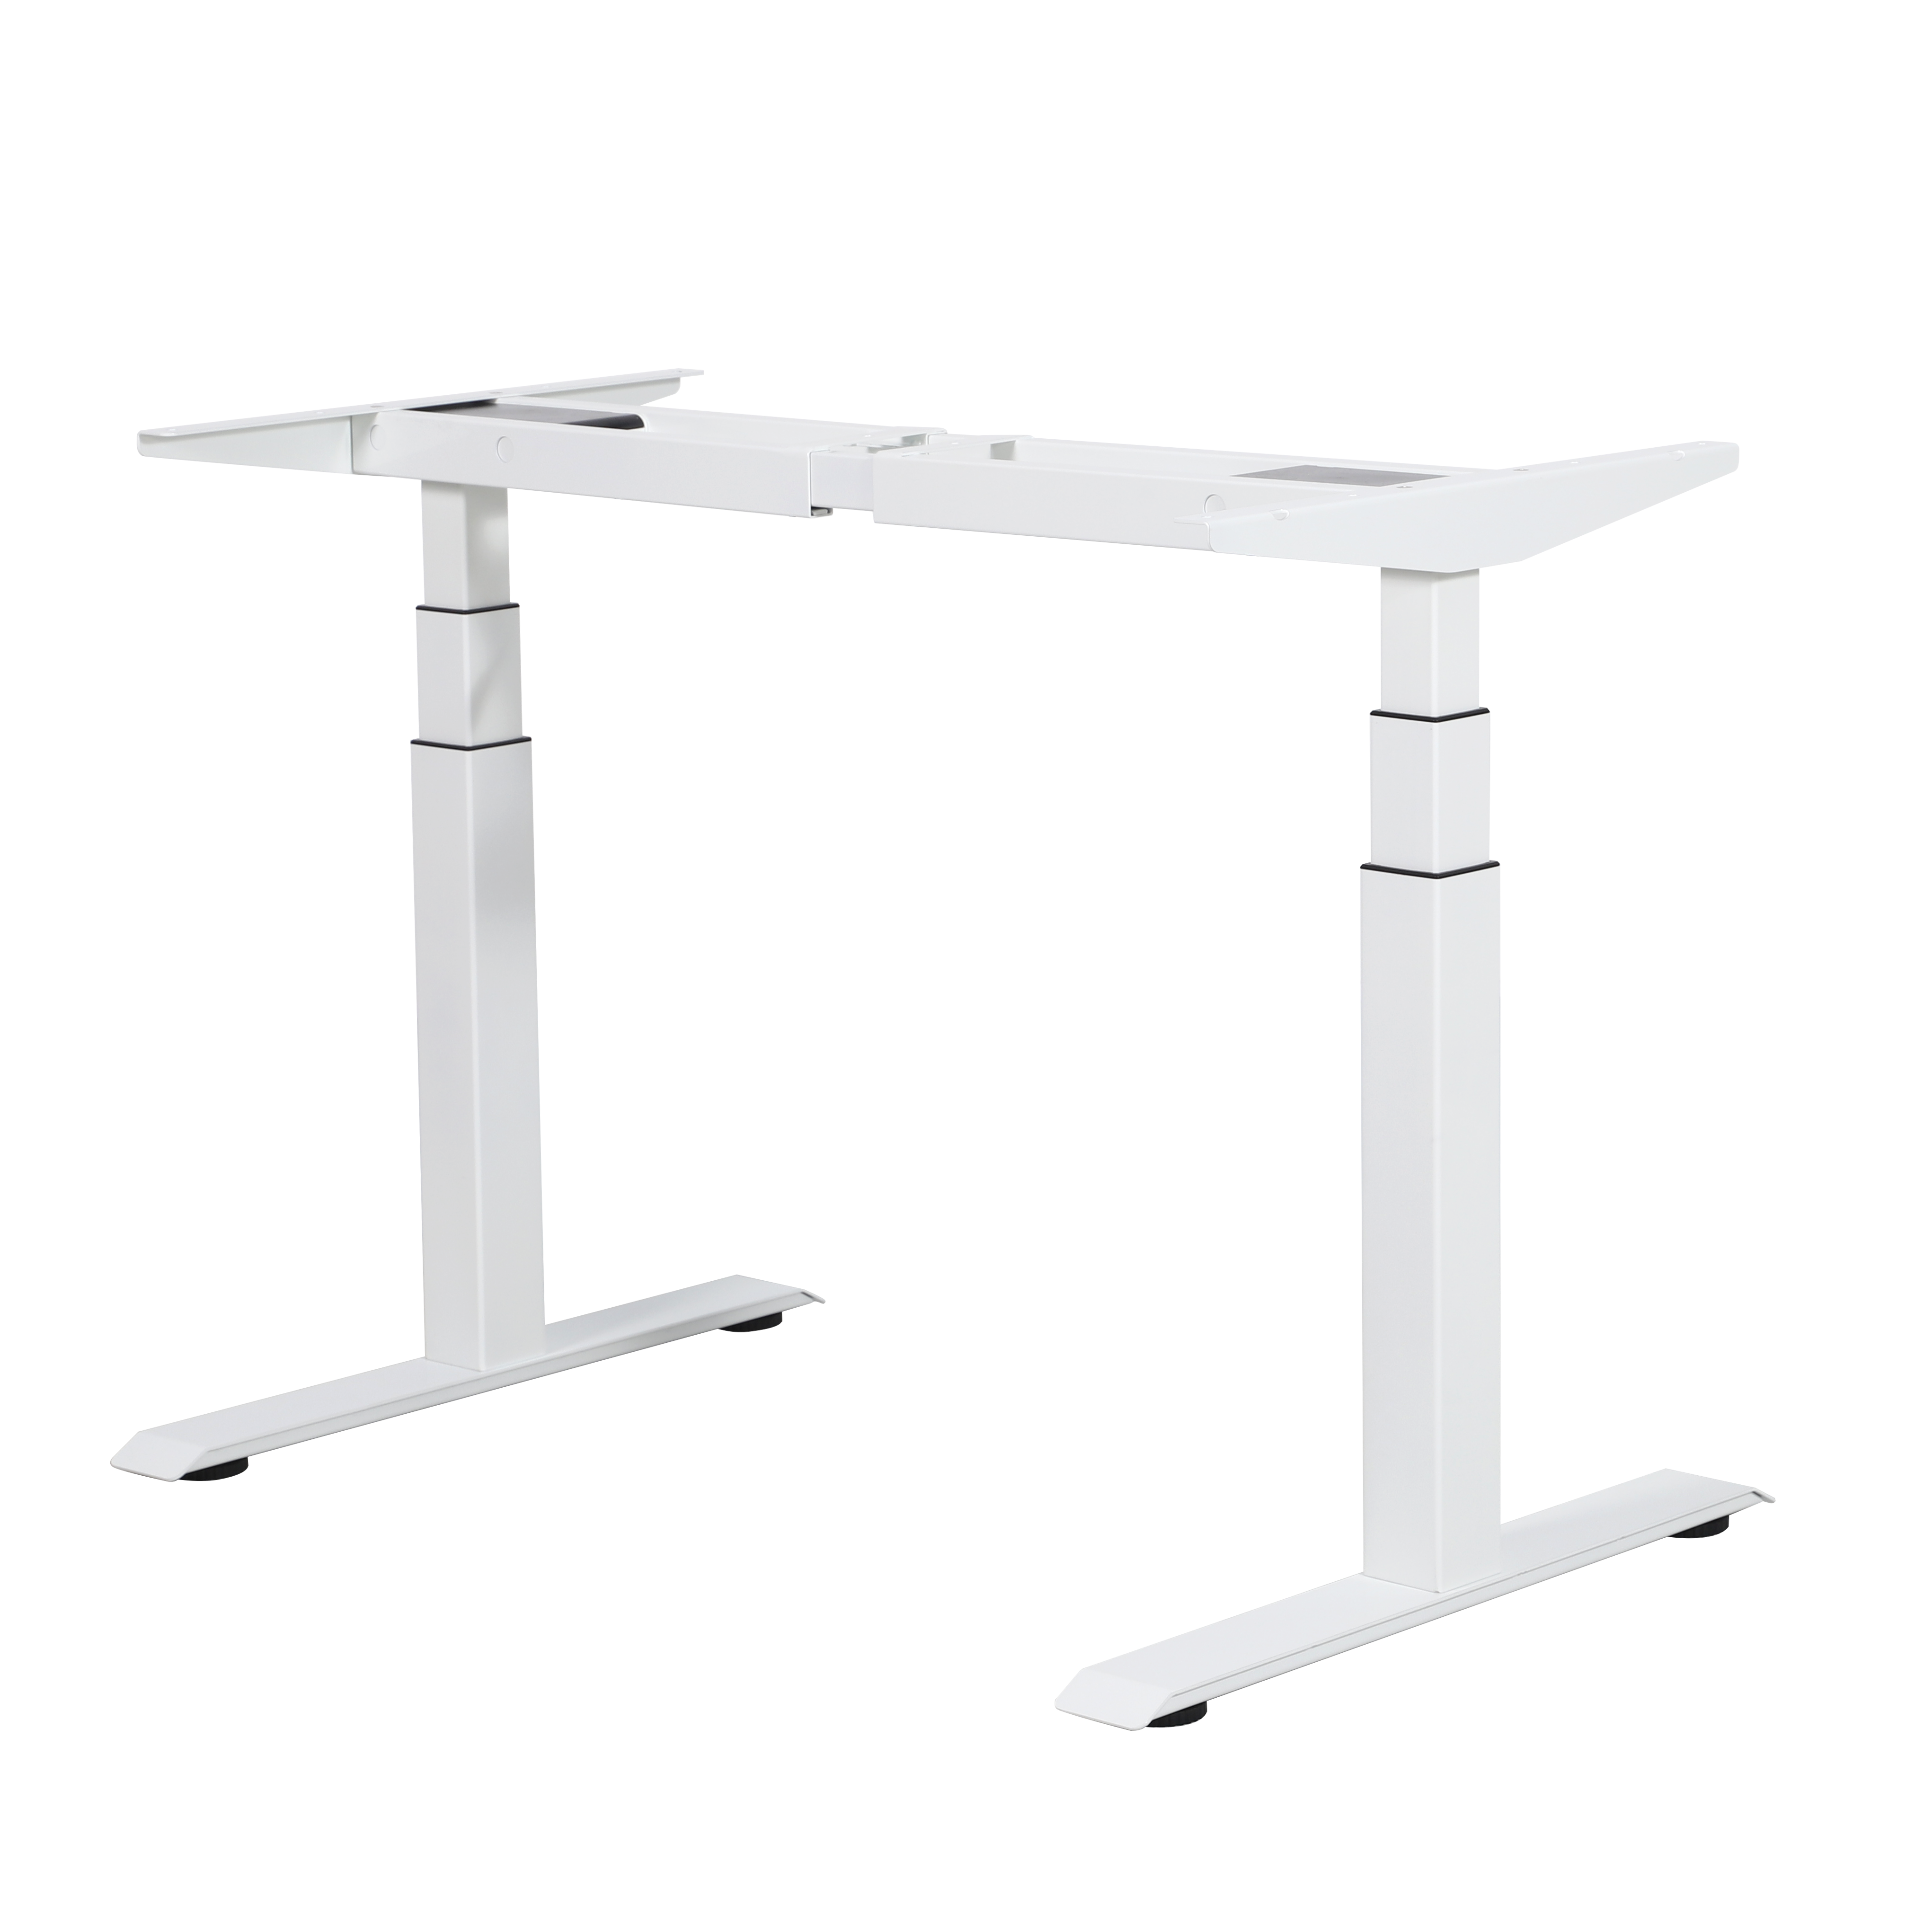 NT33-2B3 Office Desk Furniture Height Adjustable Smart Table